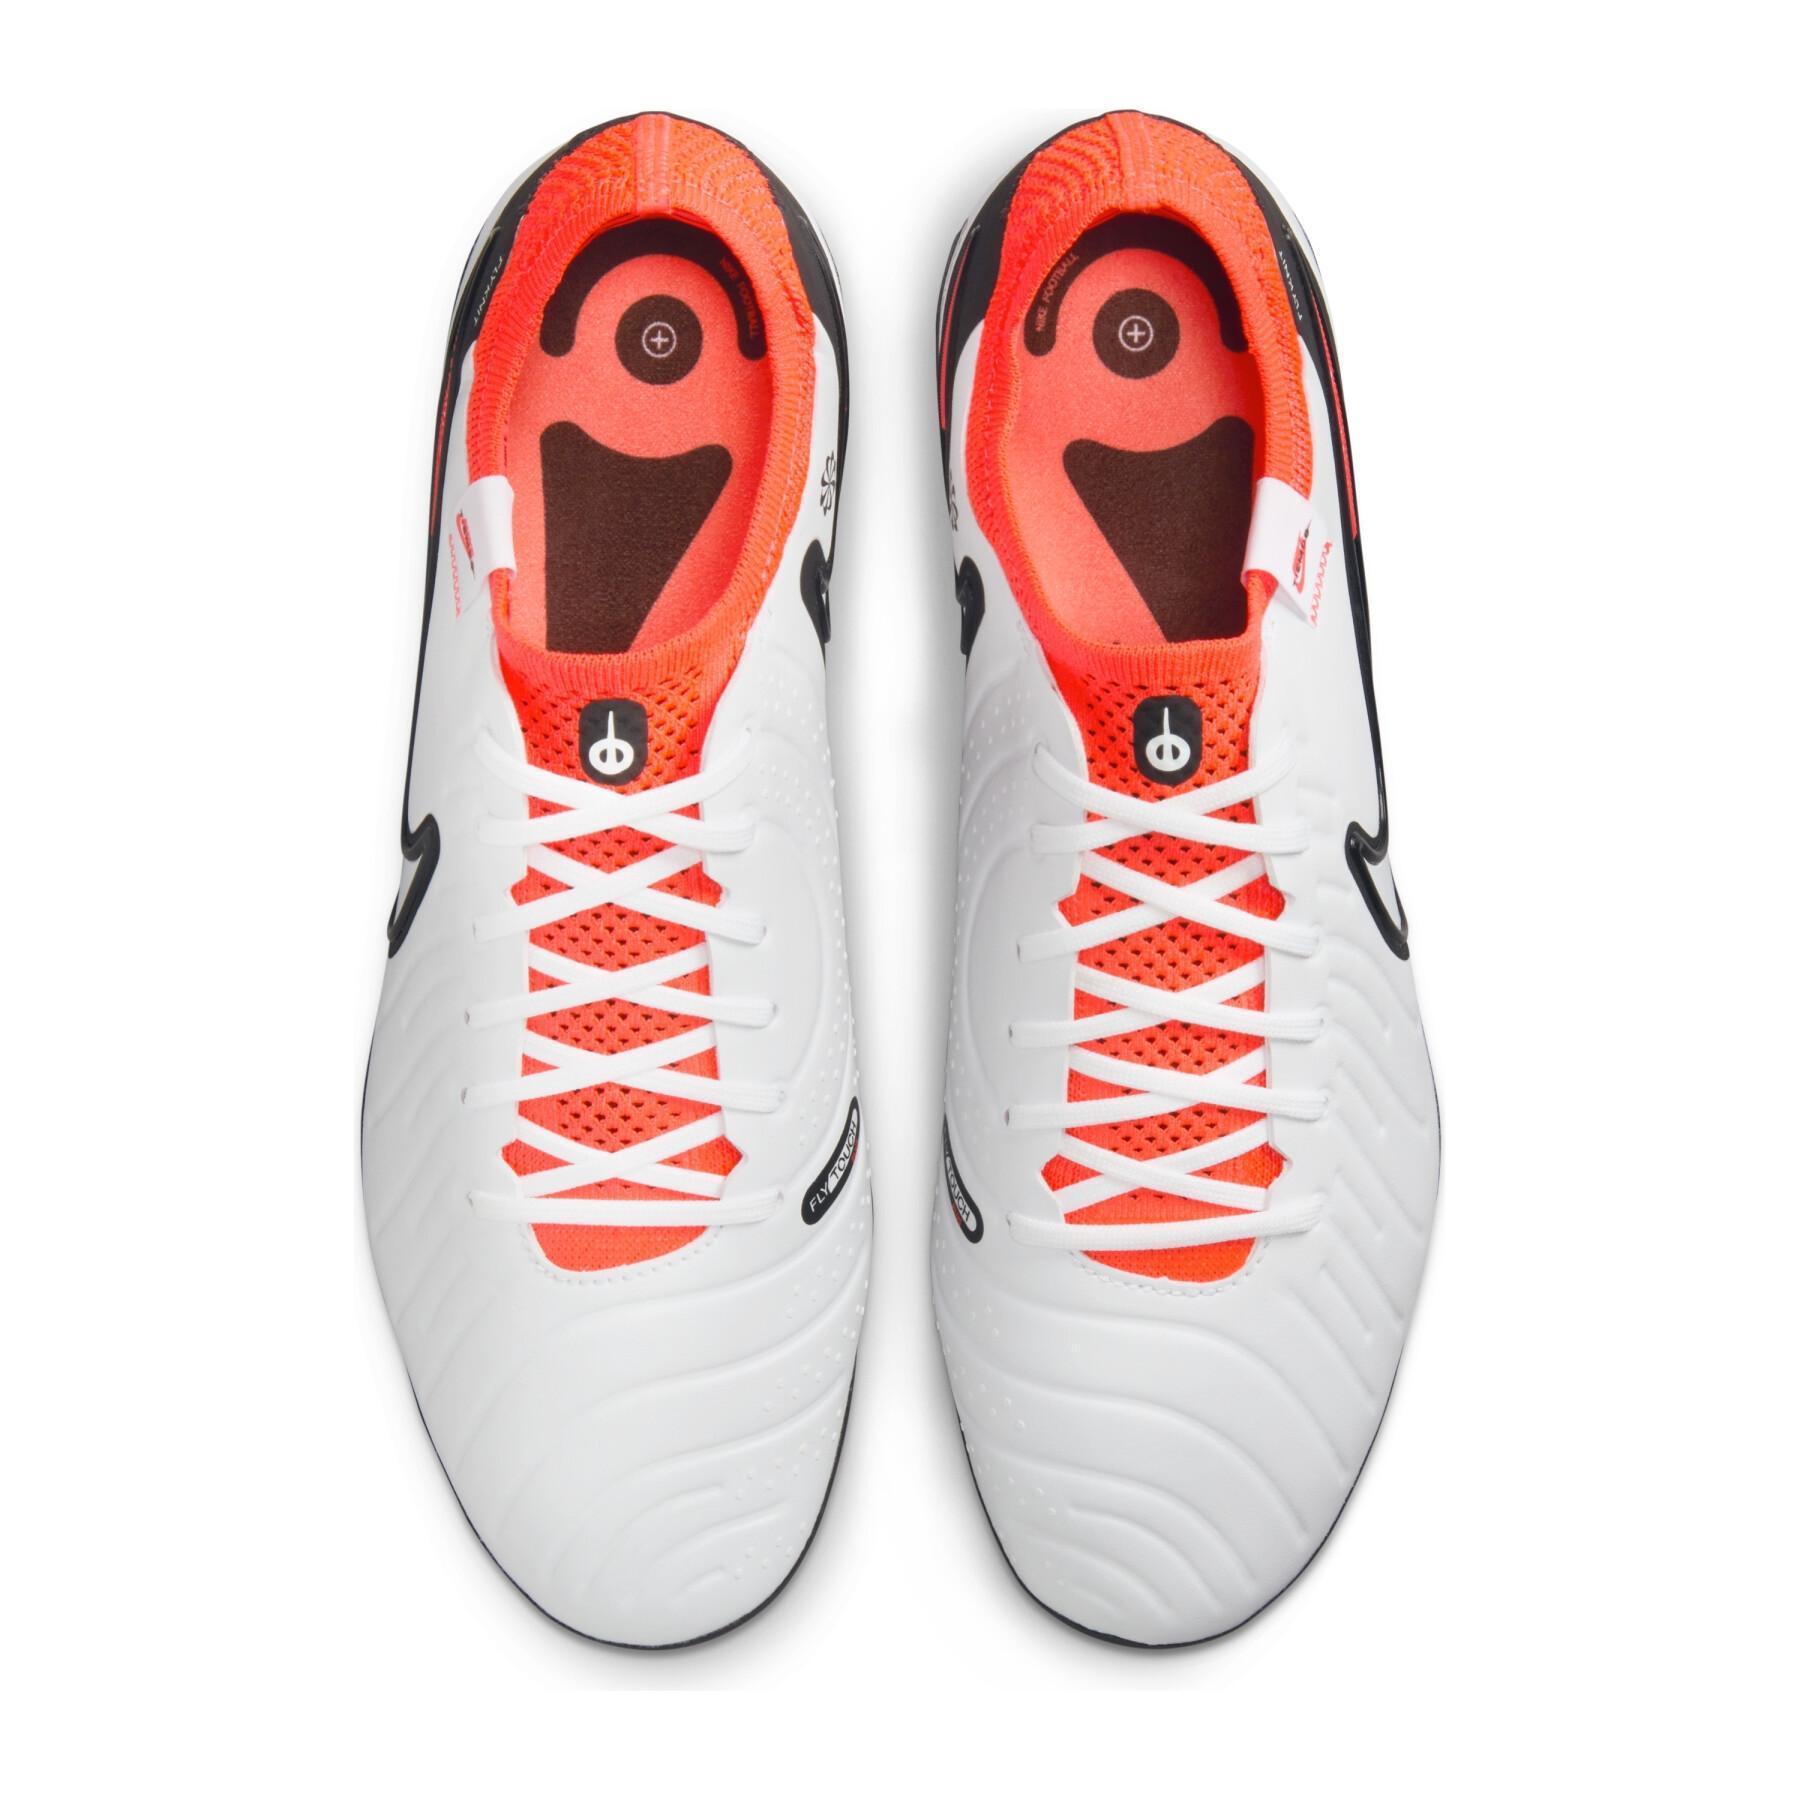 Sapatos de futebol Nike Tiempo Legend 10 Elite AG-Pro - Ready Pack